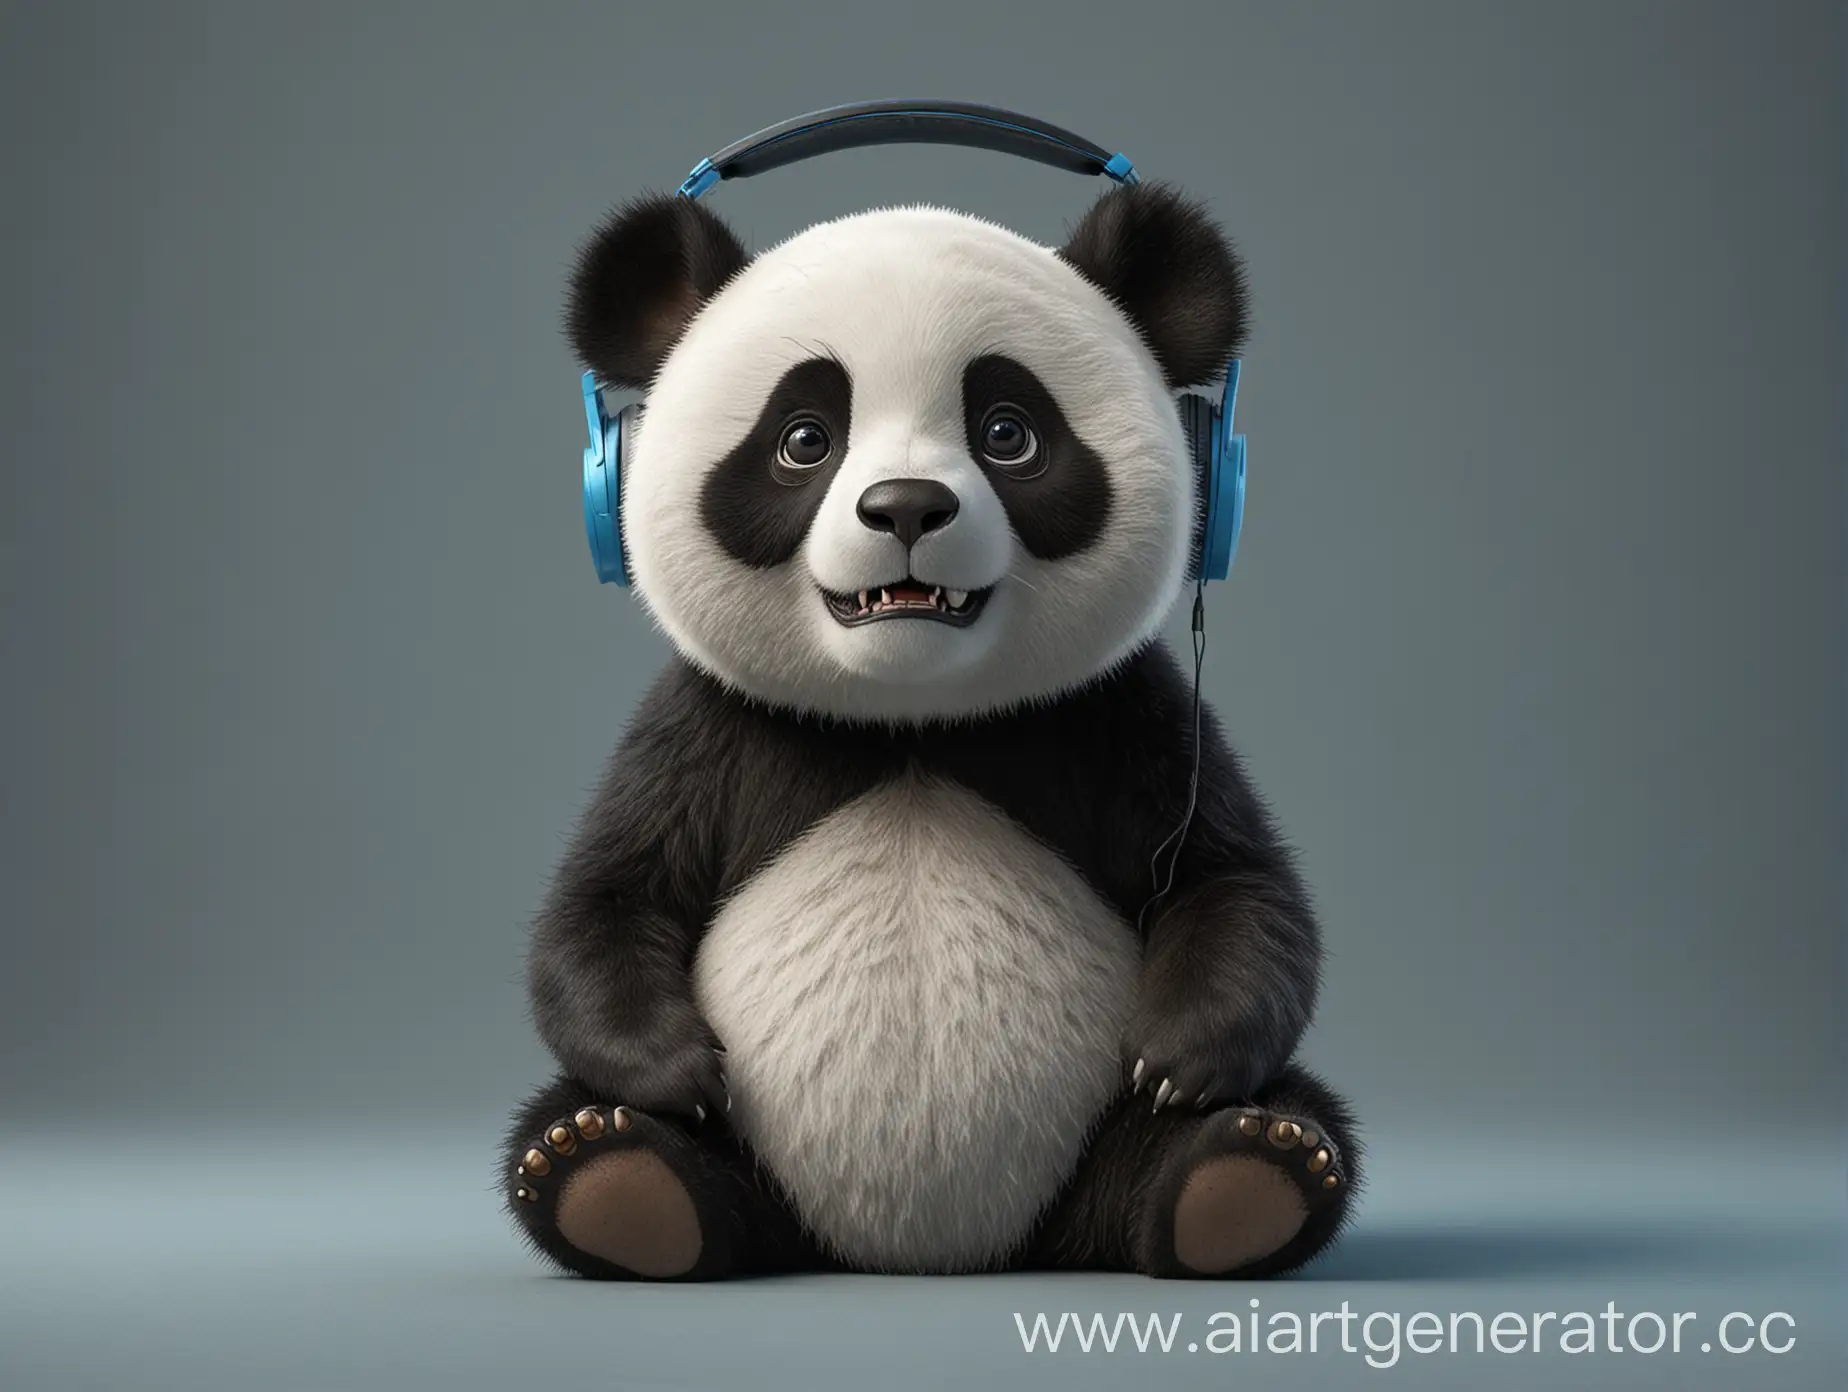 3D-Rendered-Panda-in-Headphones-Enjoying-Music-Against-Gray-Backdrop